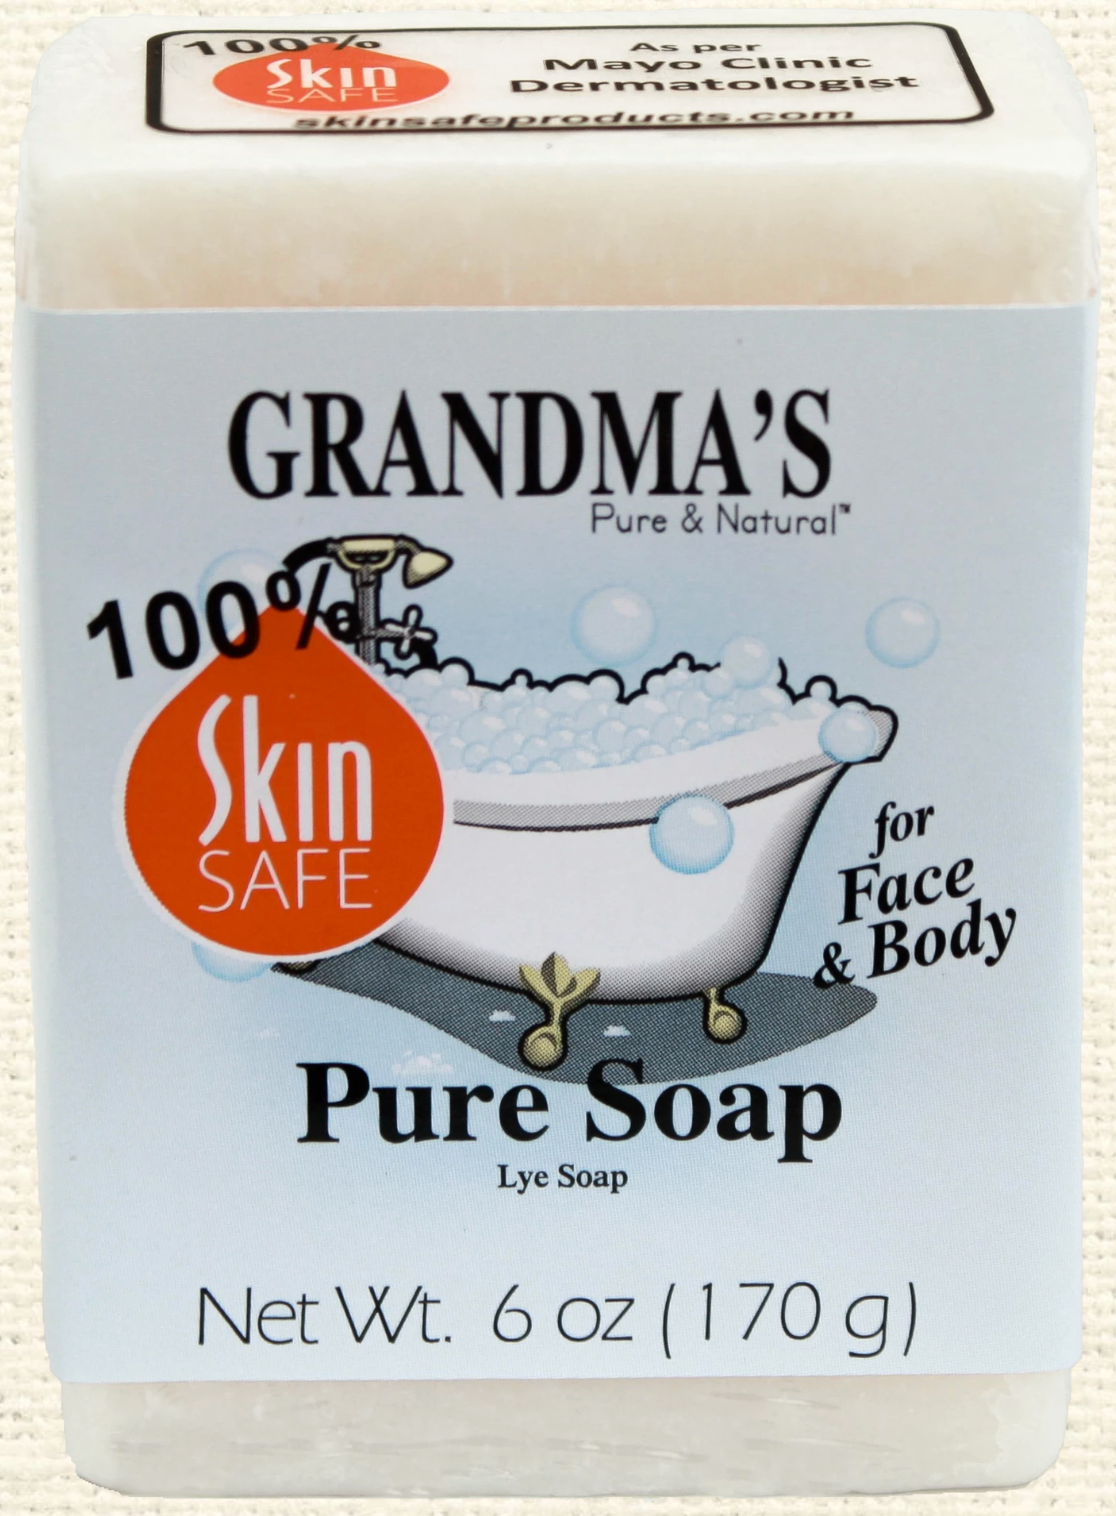 Grandma's Pure & Natural Lye Soap - Pharm Favorites by Economy Pharmacy